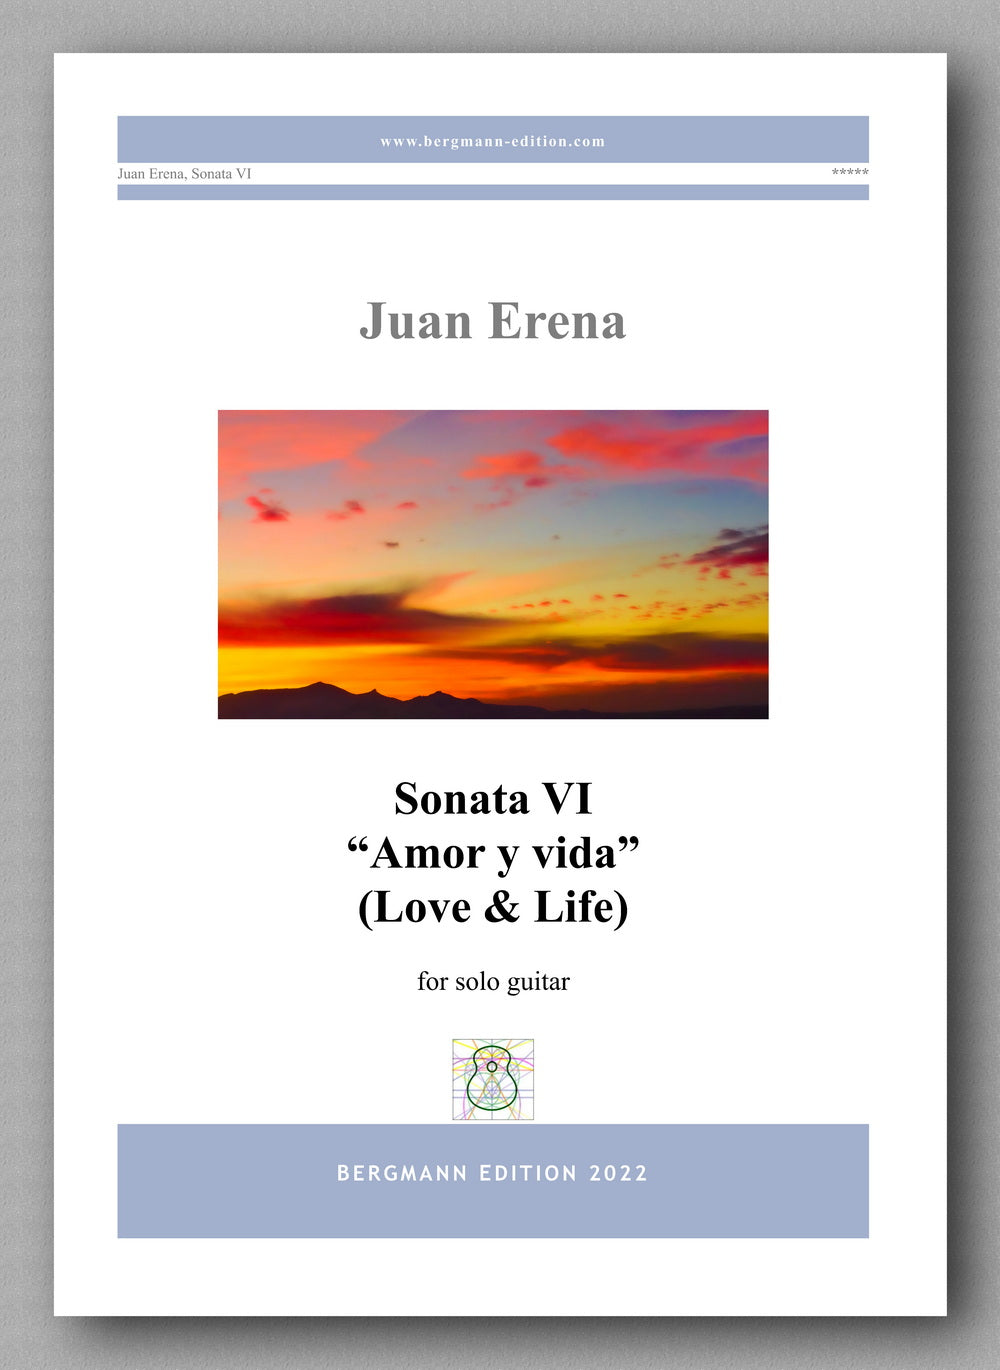 Juan Erena, Sonata VI, “Amor y vida” (Love & Life) - preview of the cover